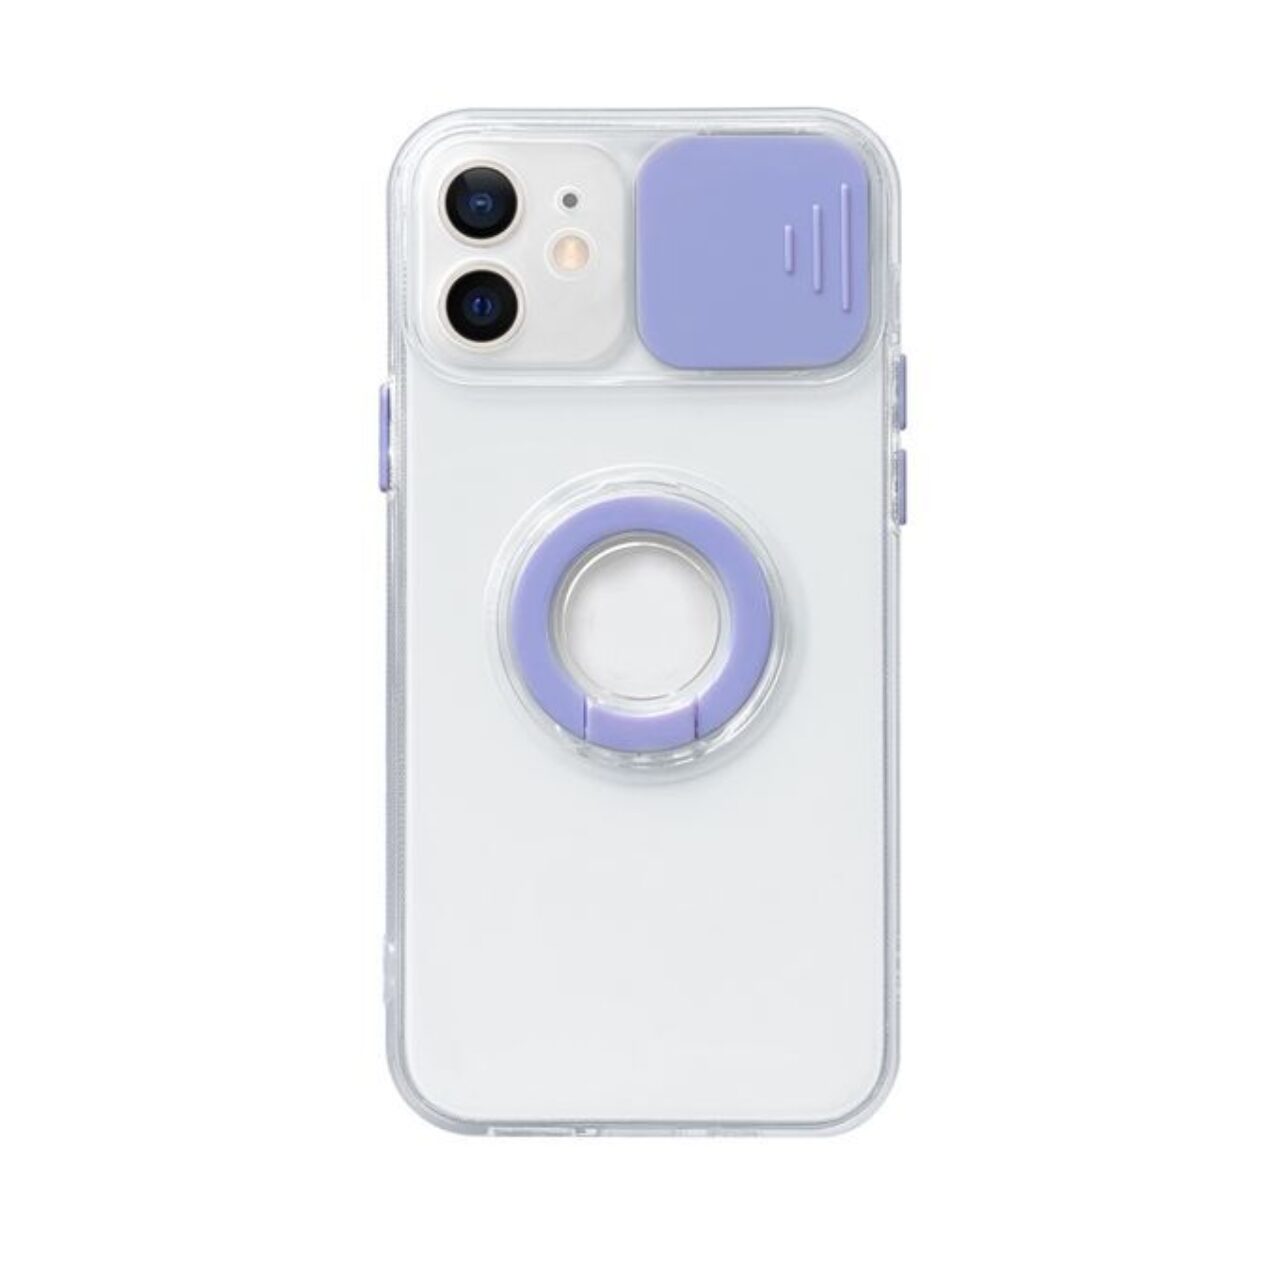 Sliding Camera Cover TPU Protective Case For i Phone PURPLE